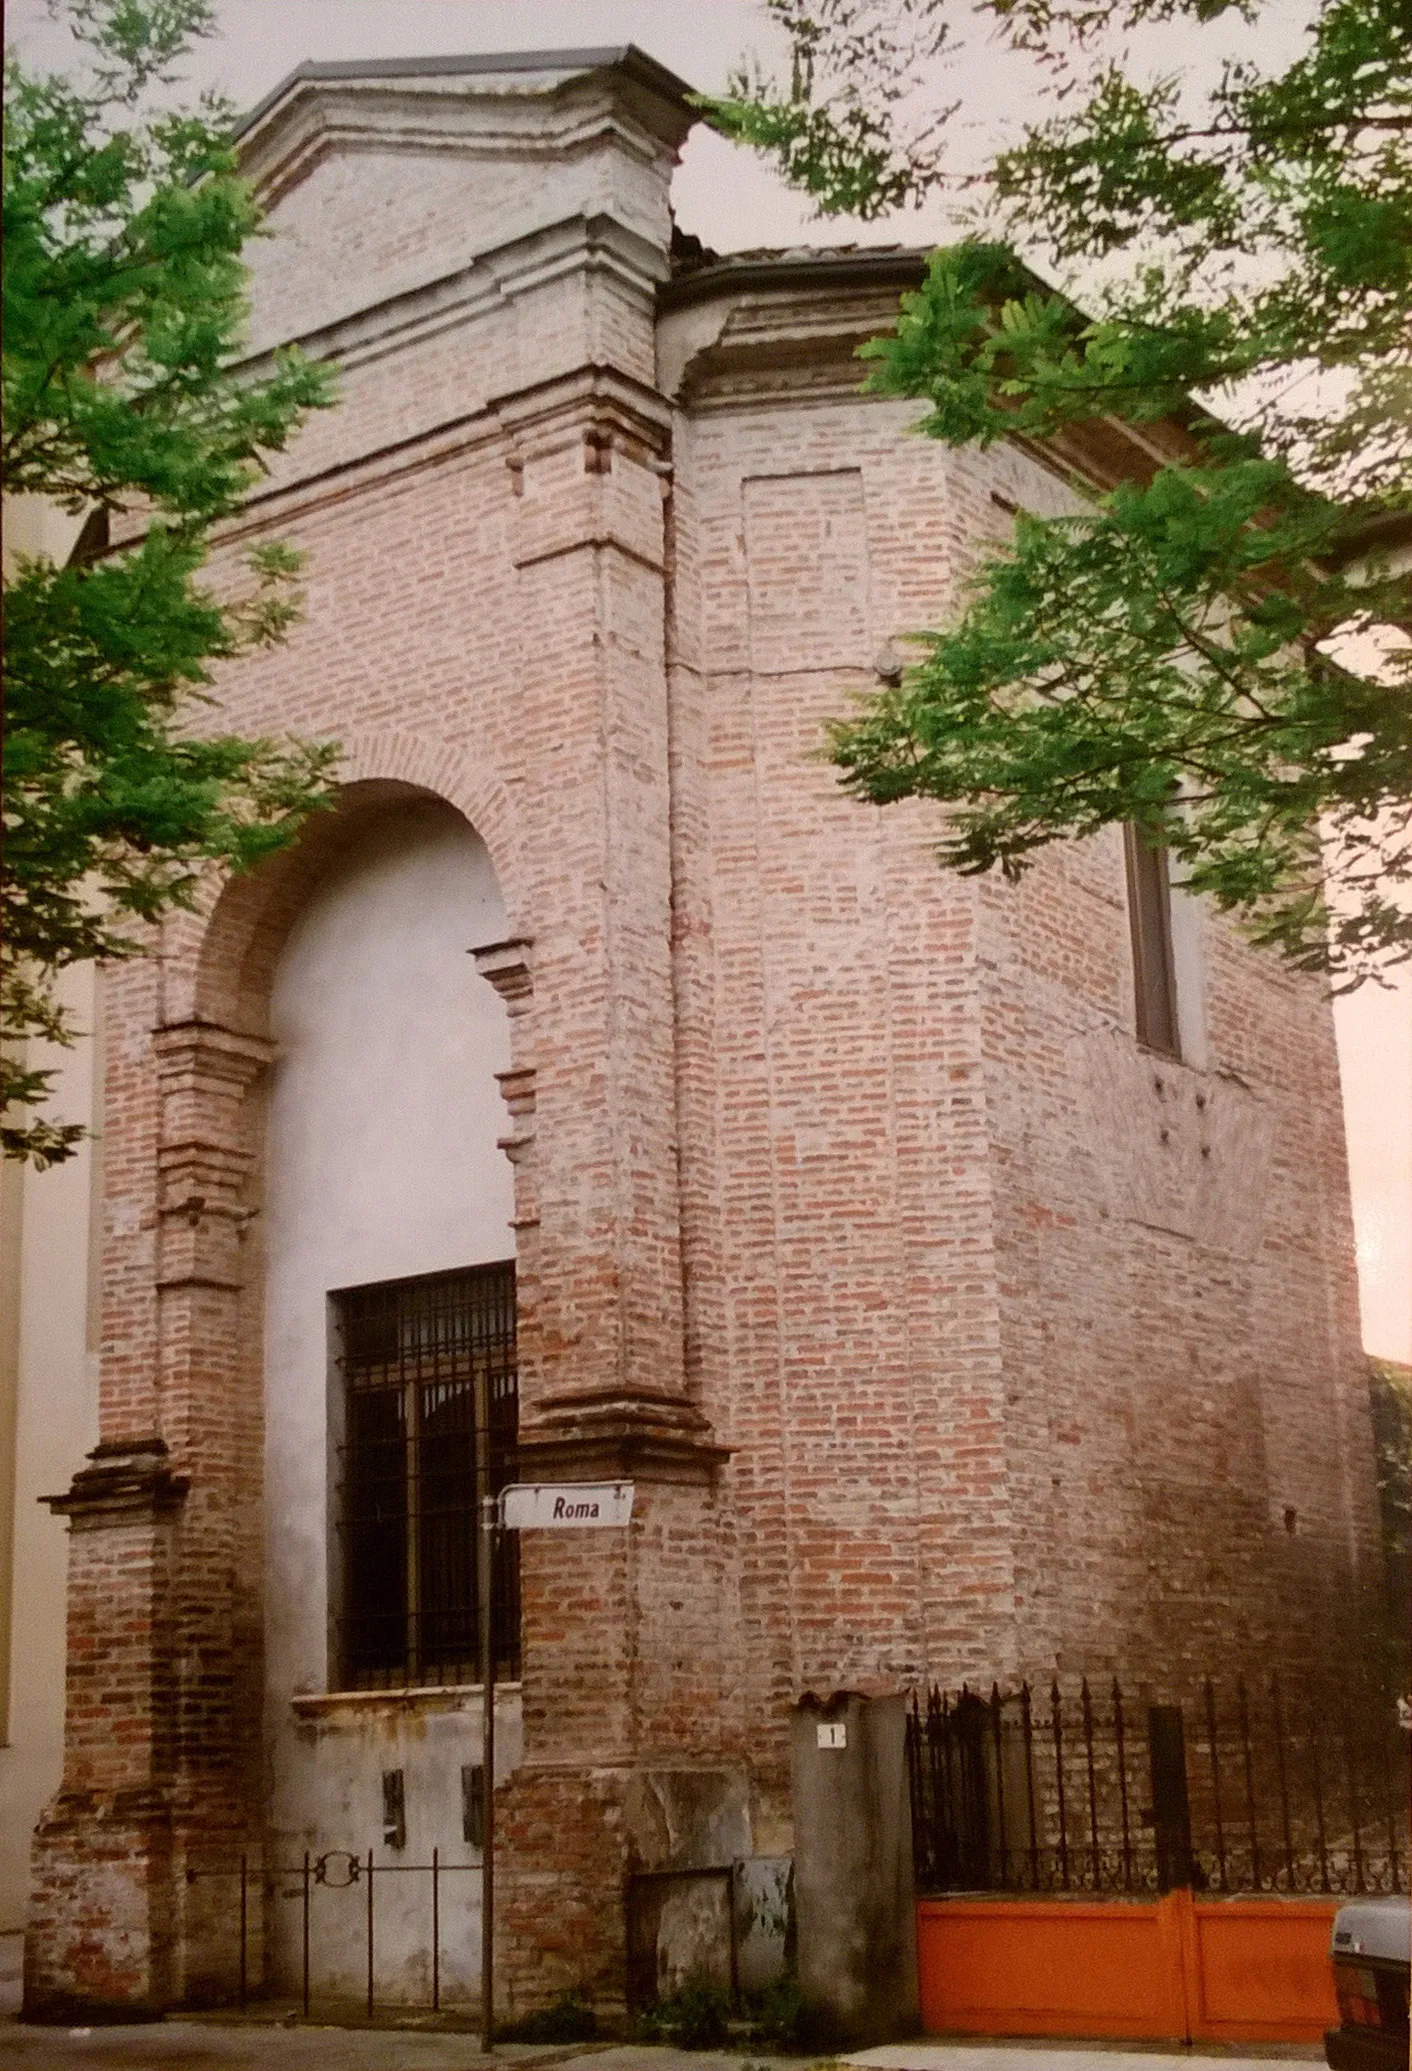 Image of Castel Mella